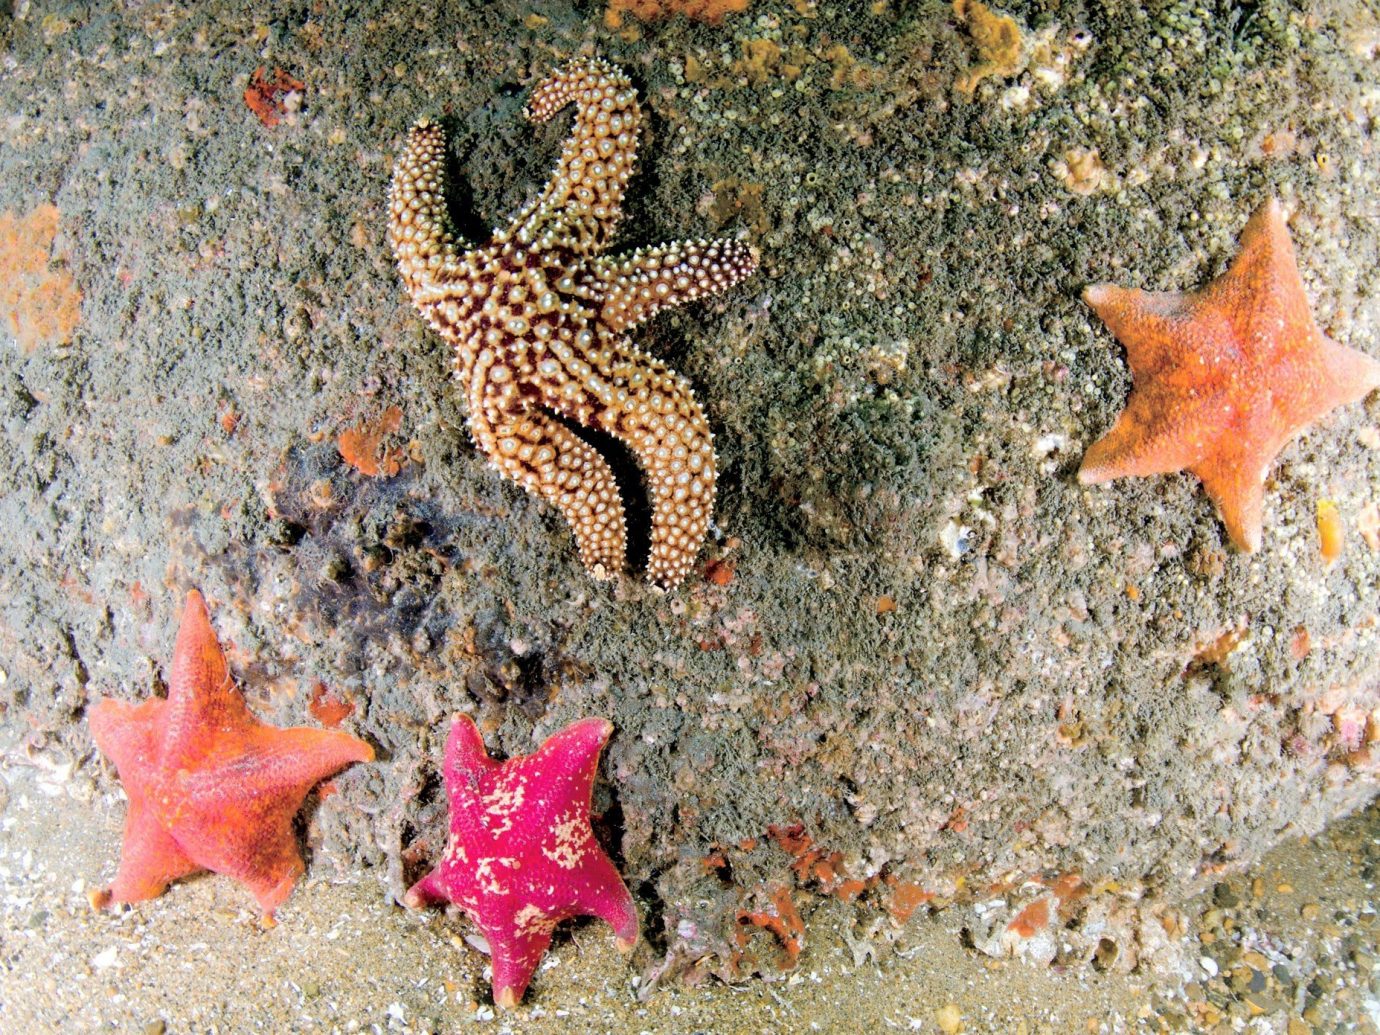 Hotels starfish animal echinoderm marine biology outdoor fauna marine invertebrates invertebrate biology coral